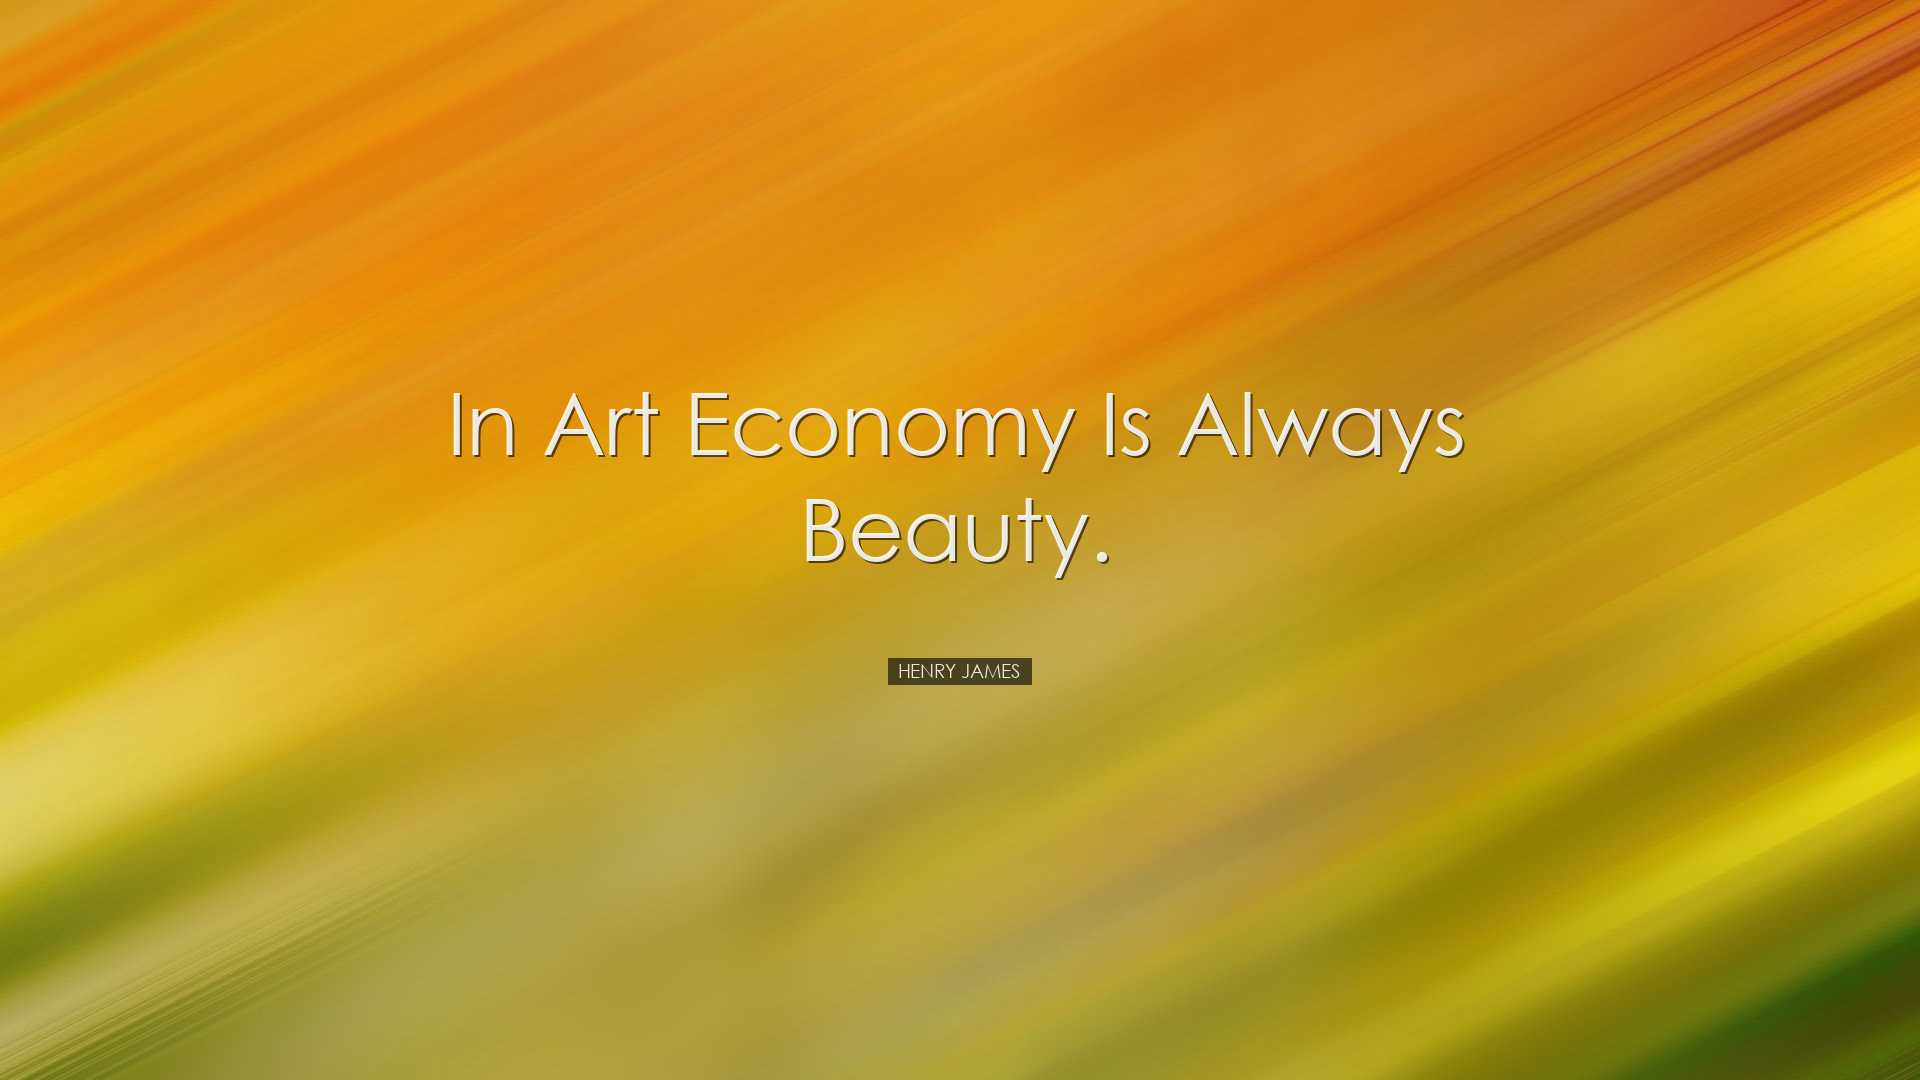 In art economy is always beauty. - Henry James